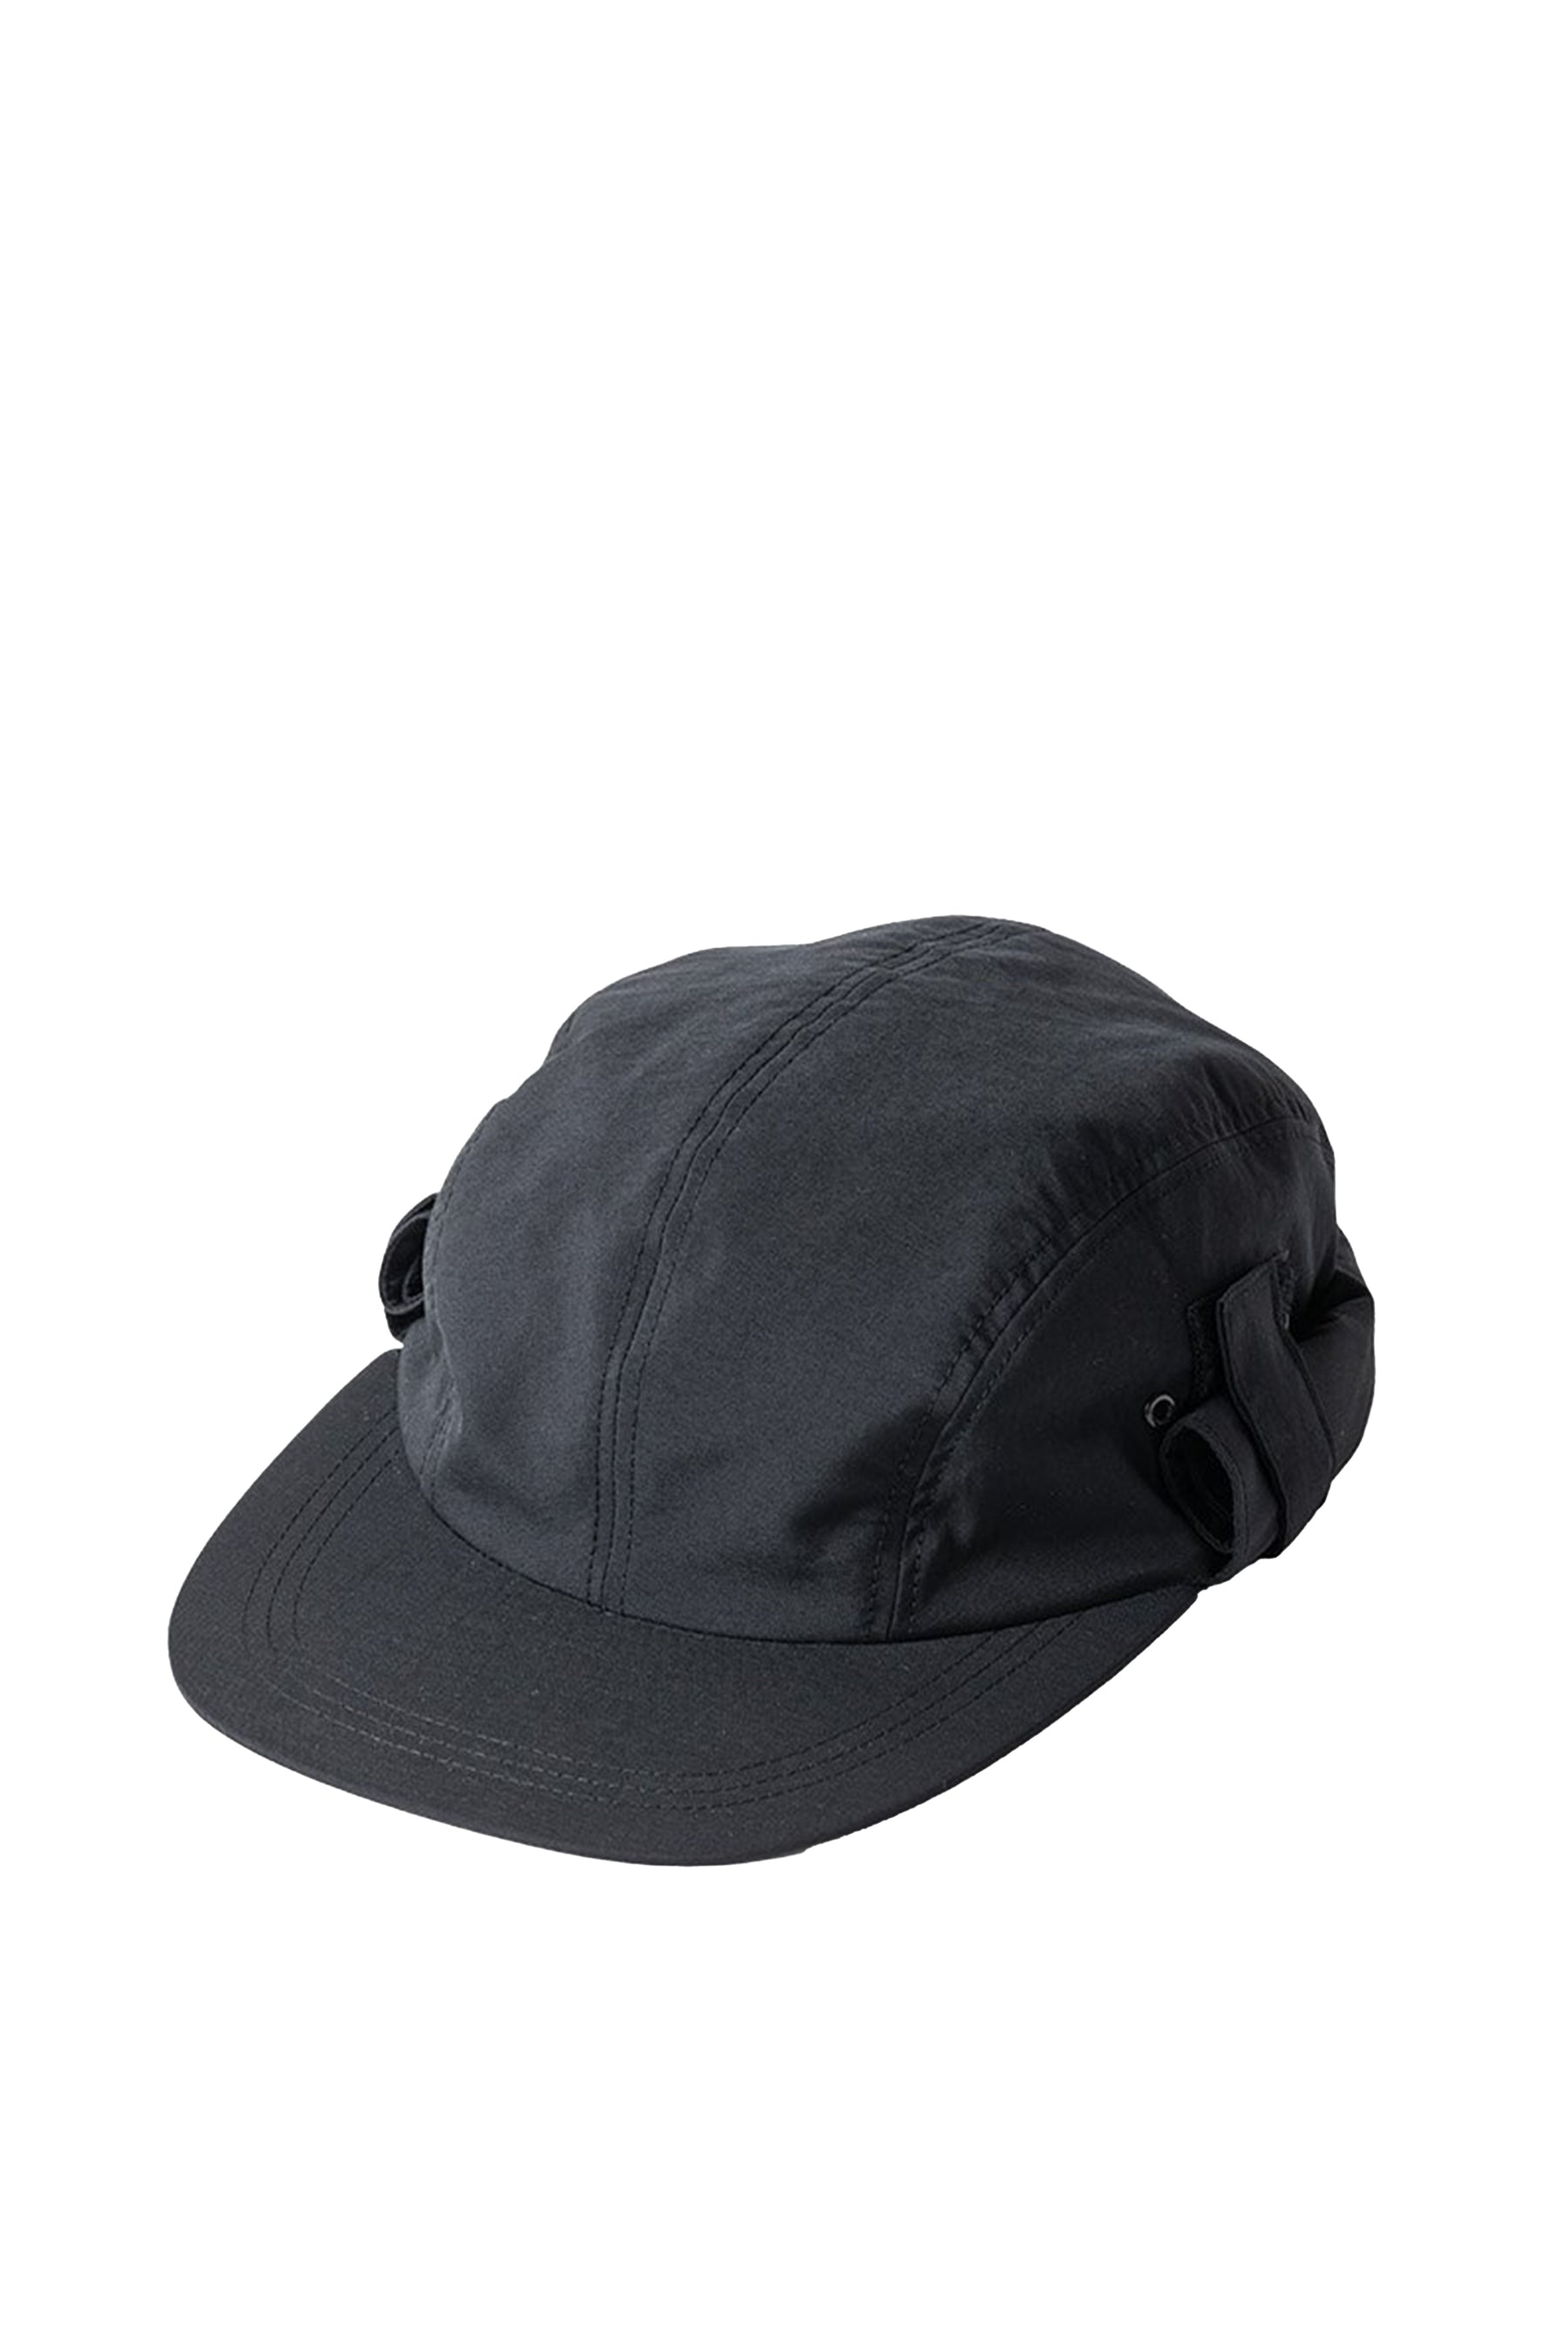 SUNSHADE CAMP CAP / BLK